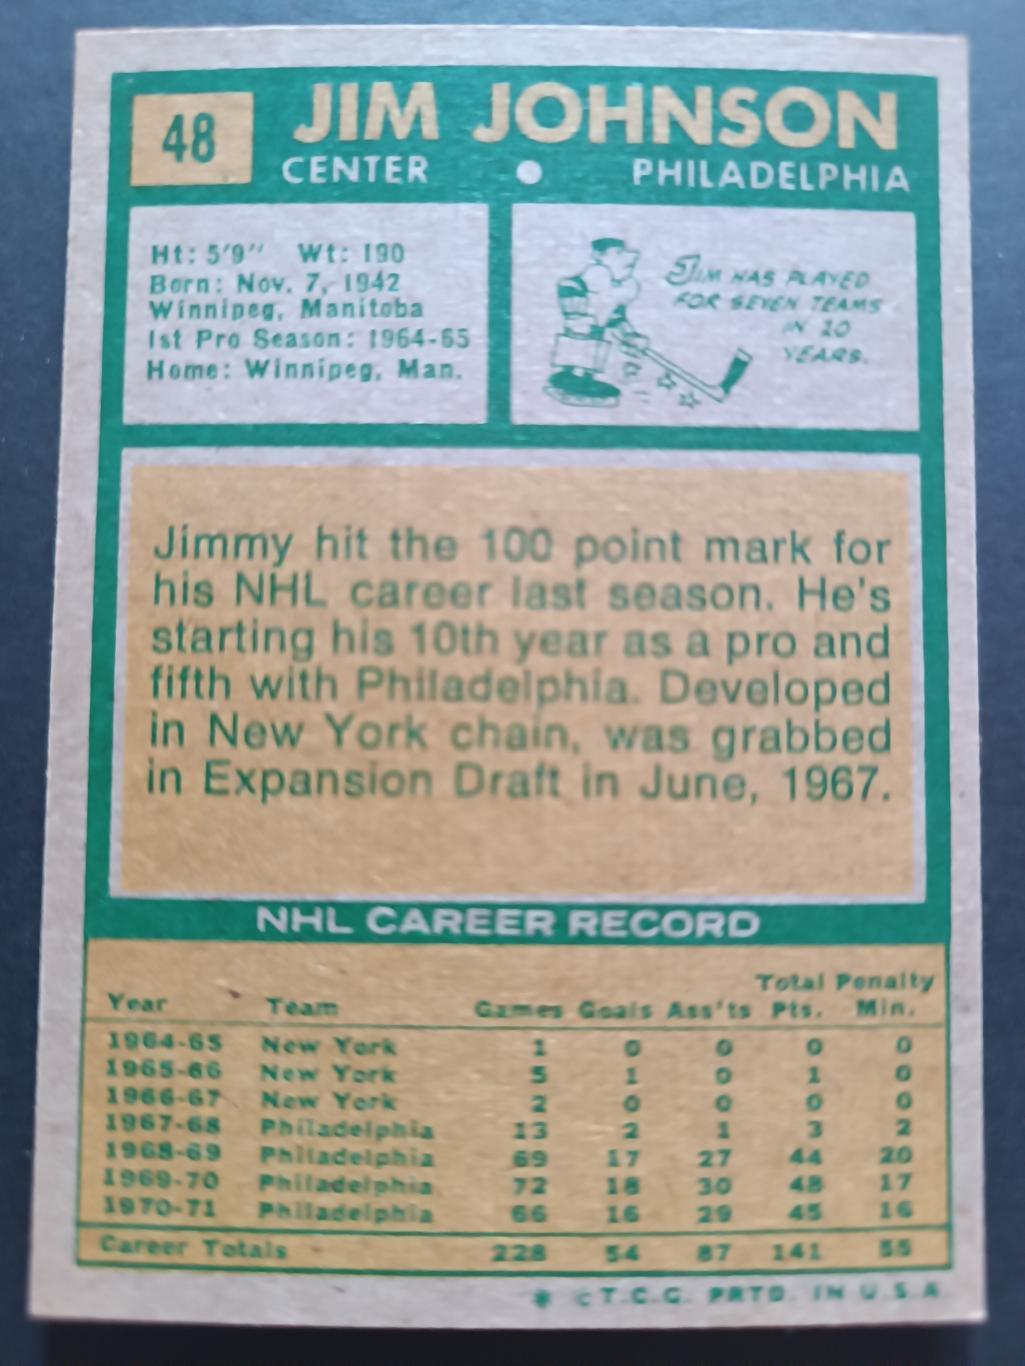 ХОККЕЙ КАРТОЧКА НХЛ TOPPS 1971-72 NHL JIM JOHNSON PHILADELPHIA FLYERS #48 1